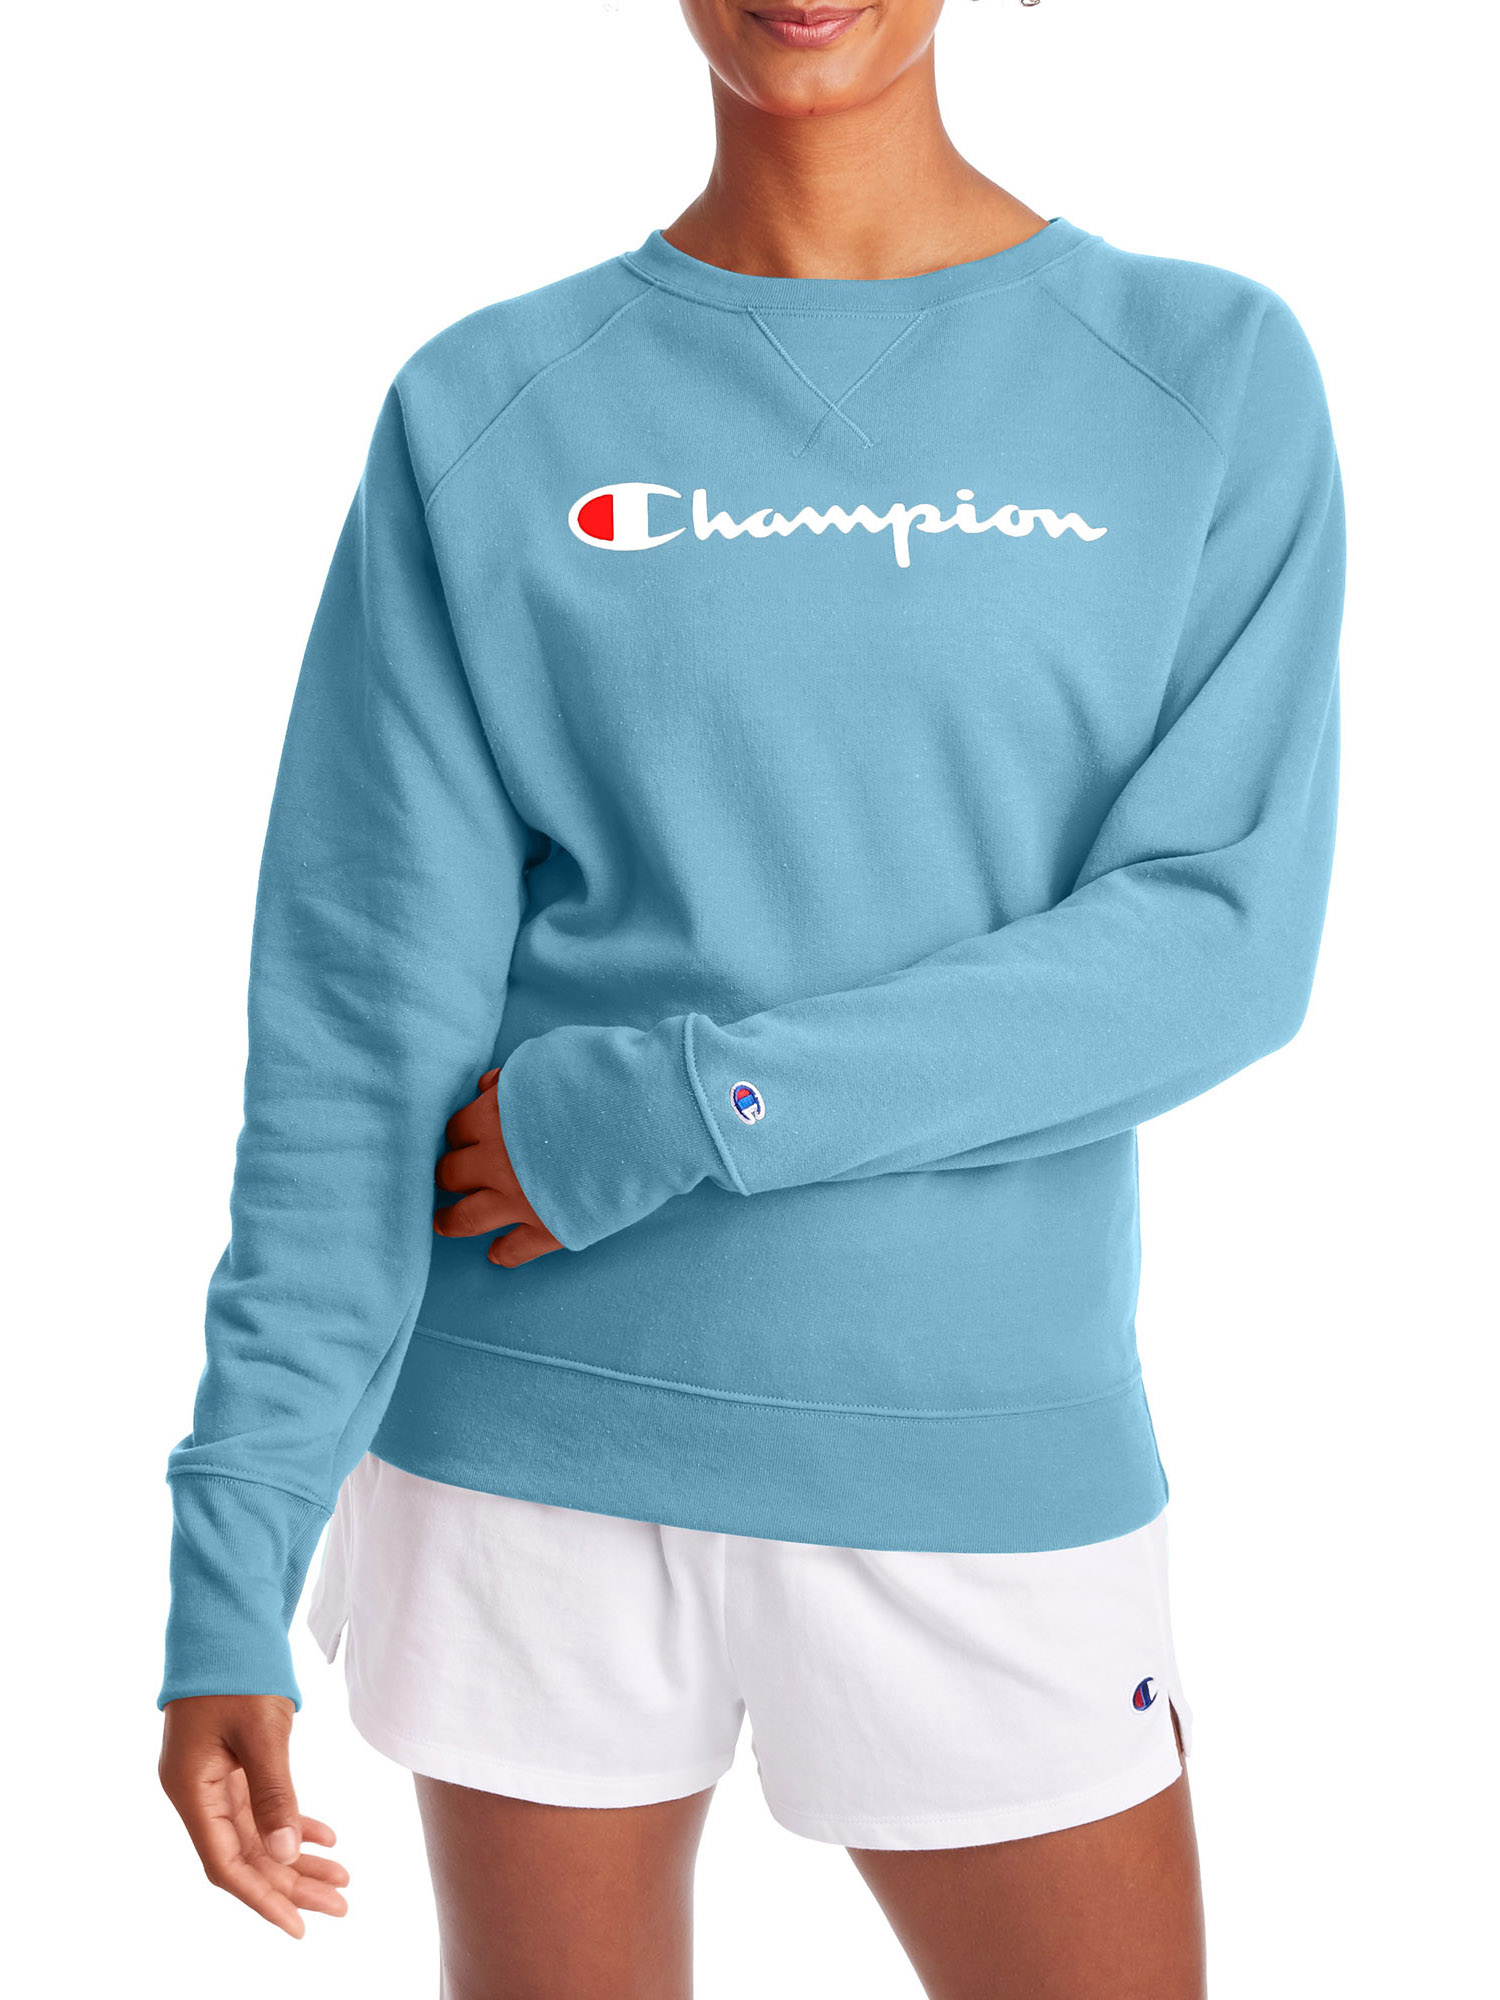 Champion Women's Powerblend Graphic Fleece Boyfriend Crewneck Sweatshirt - image 1 of 5